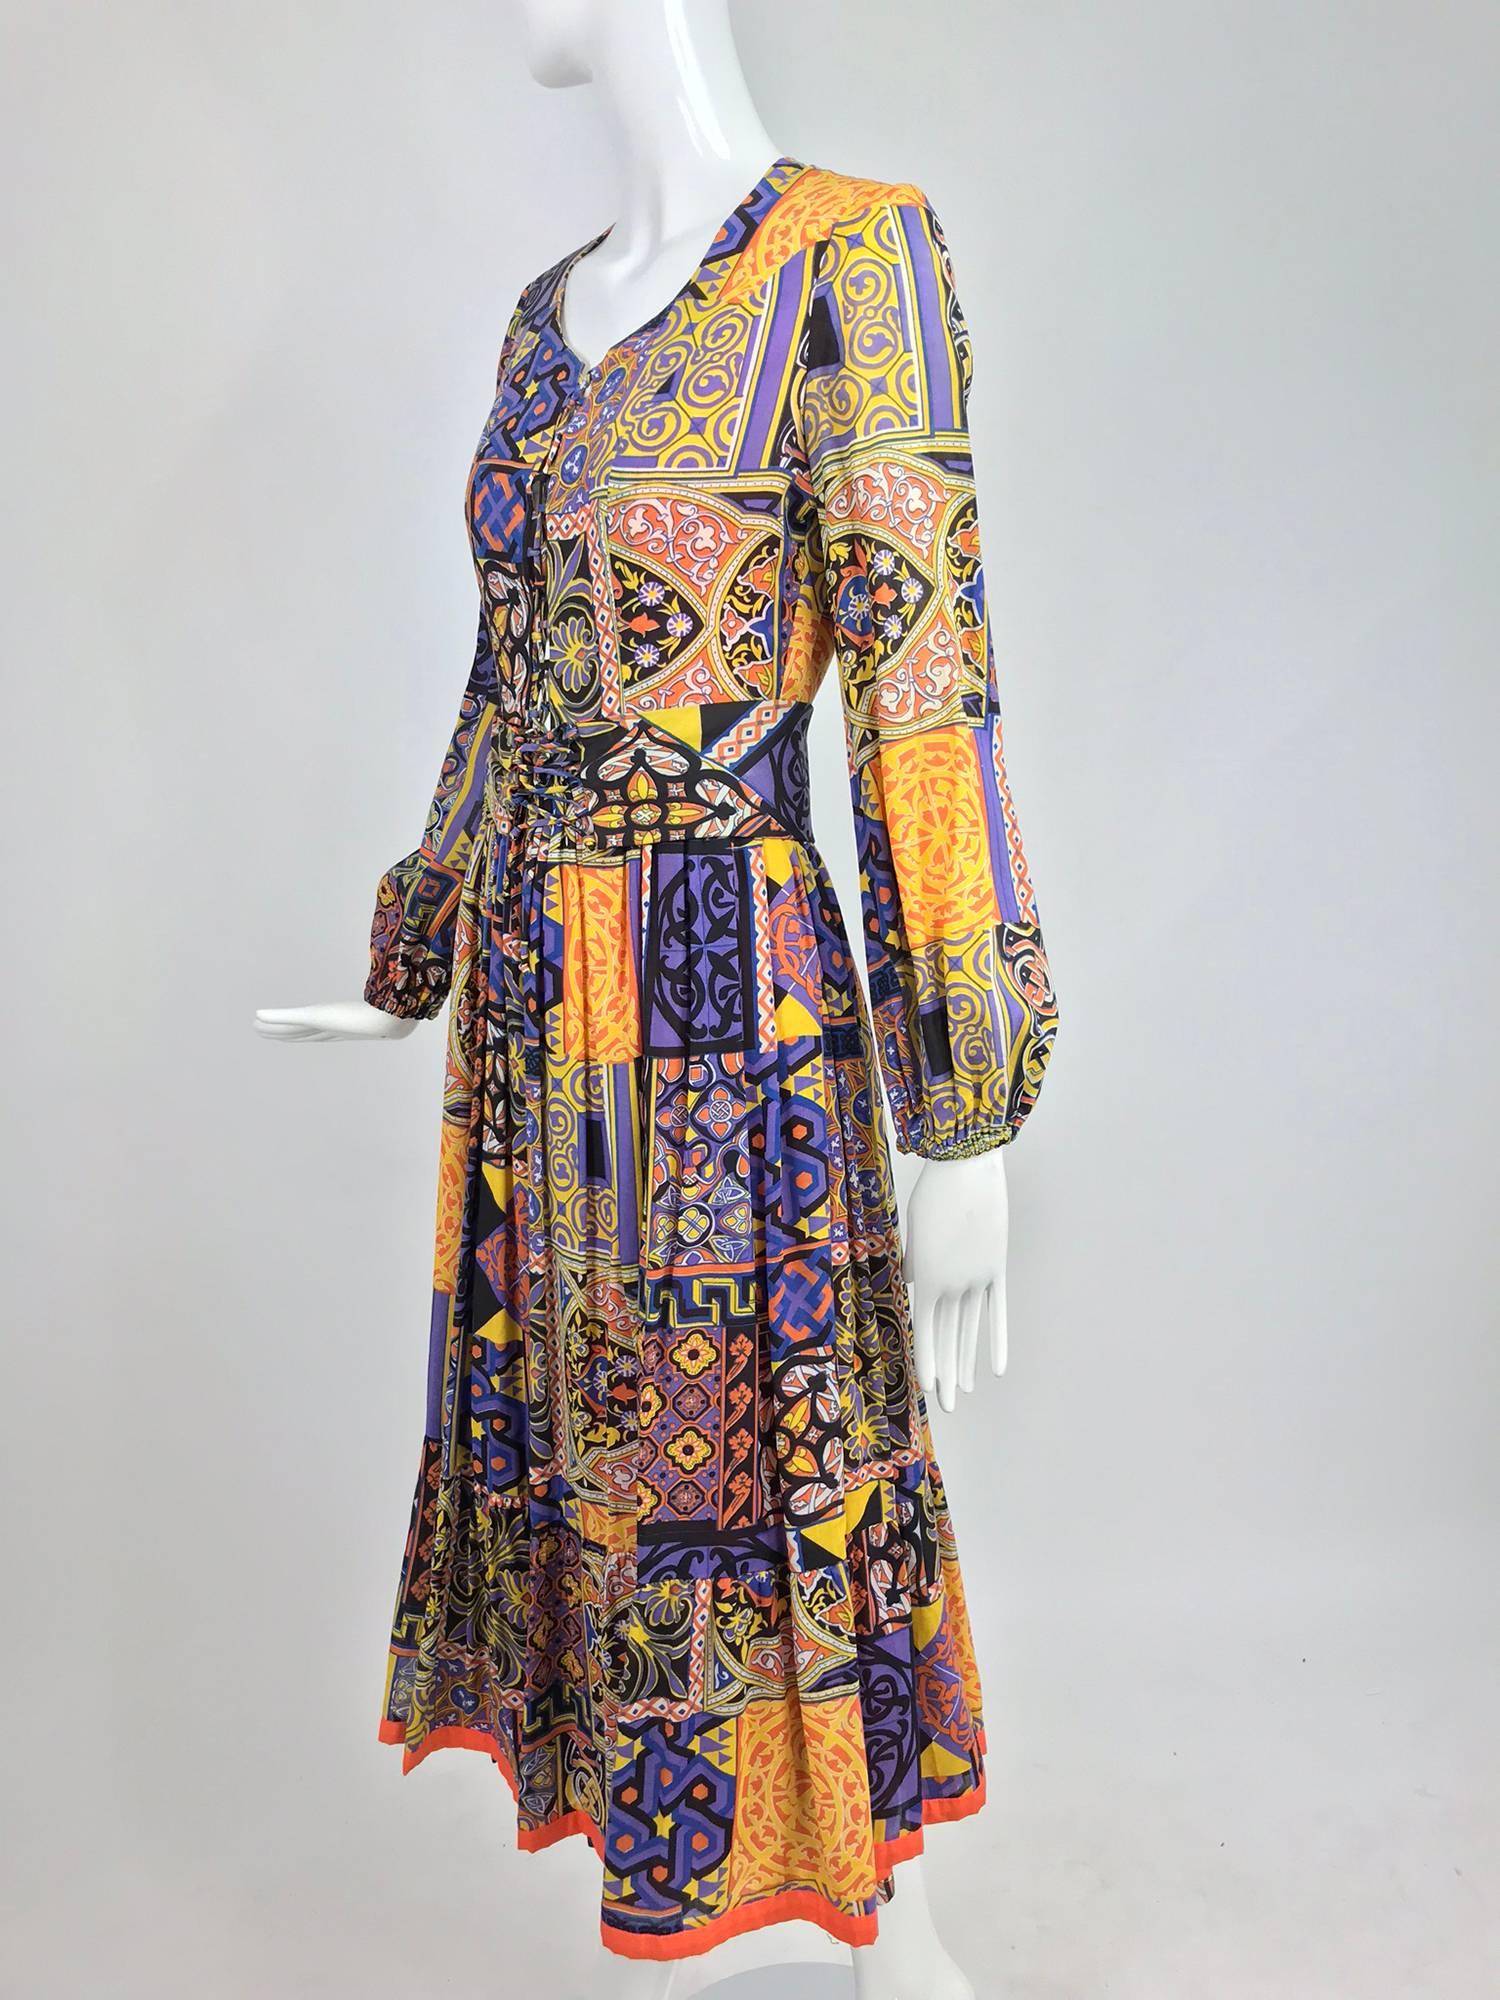 Women's Moorish mosaic cotton print laced front bohemian dress 1960s